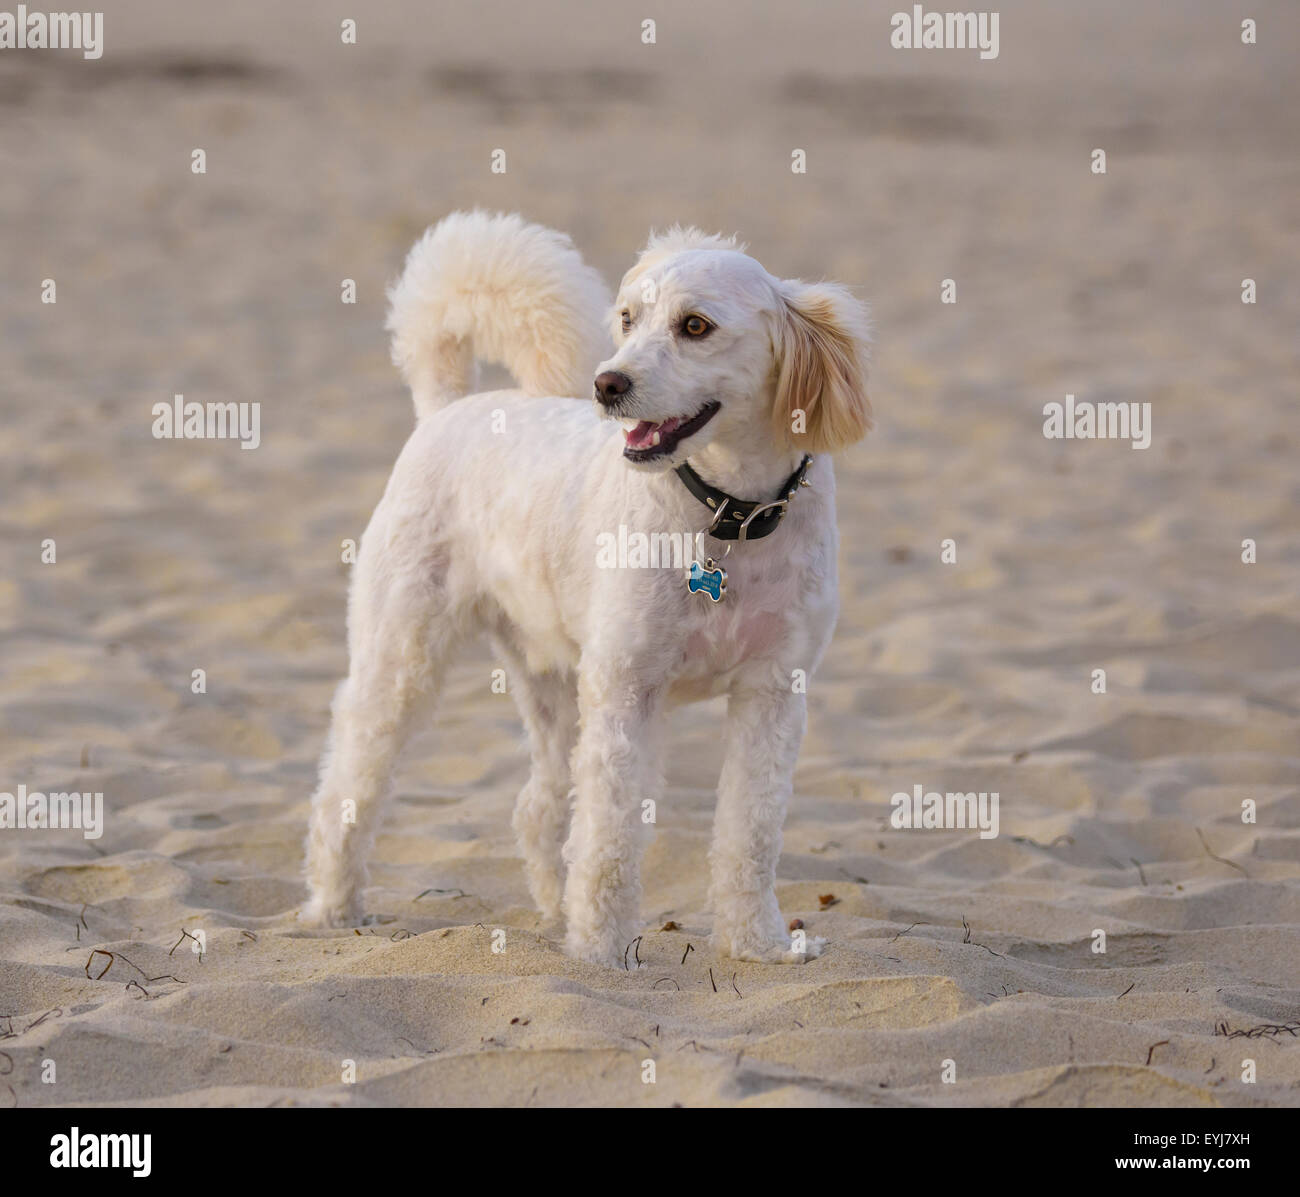 Poodle mix dog on beach sand Stock Photo